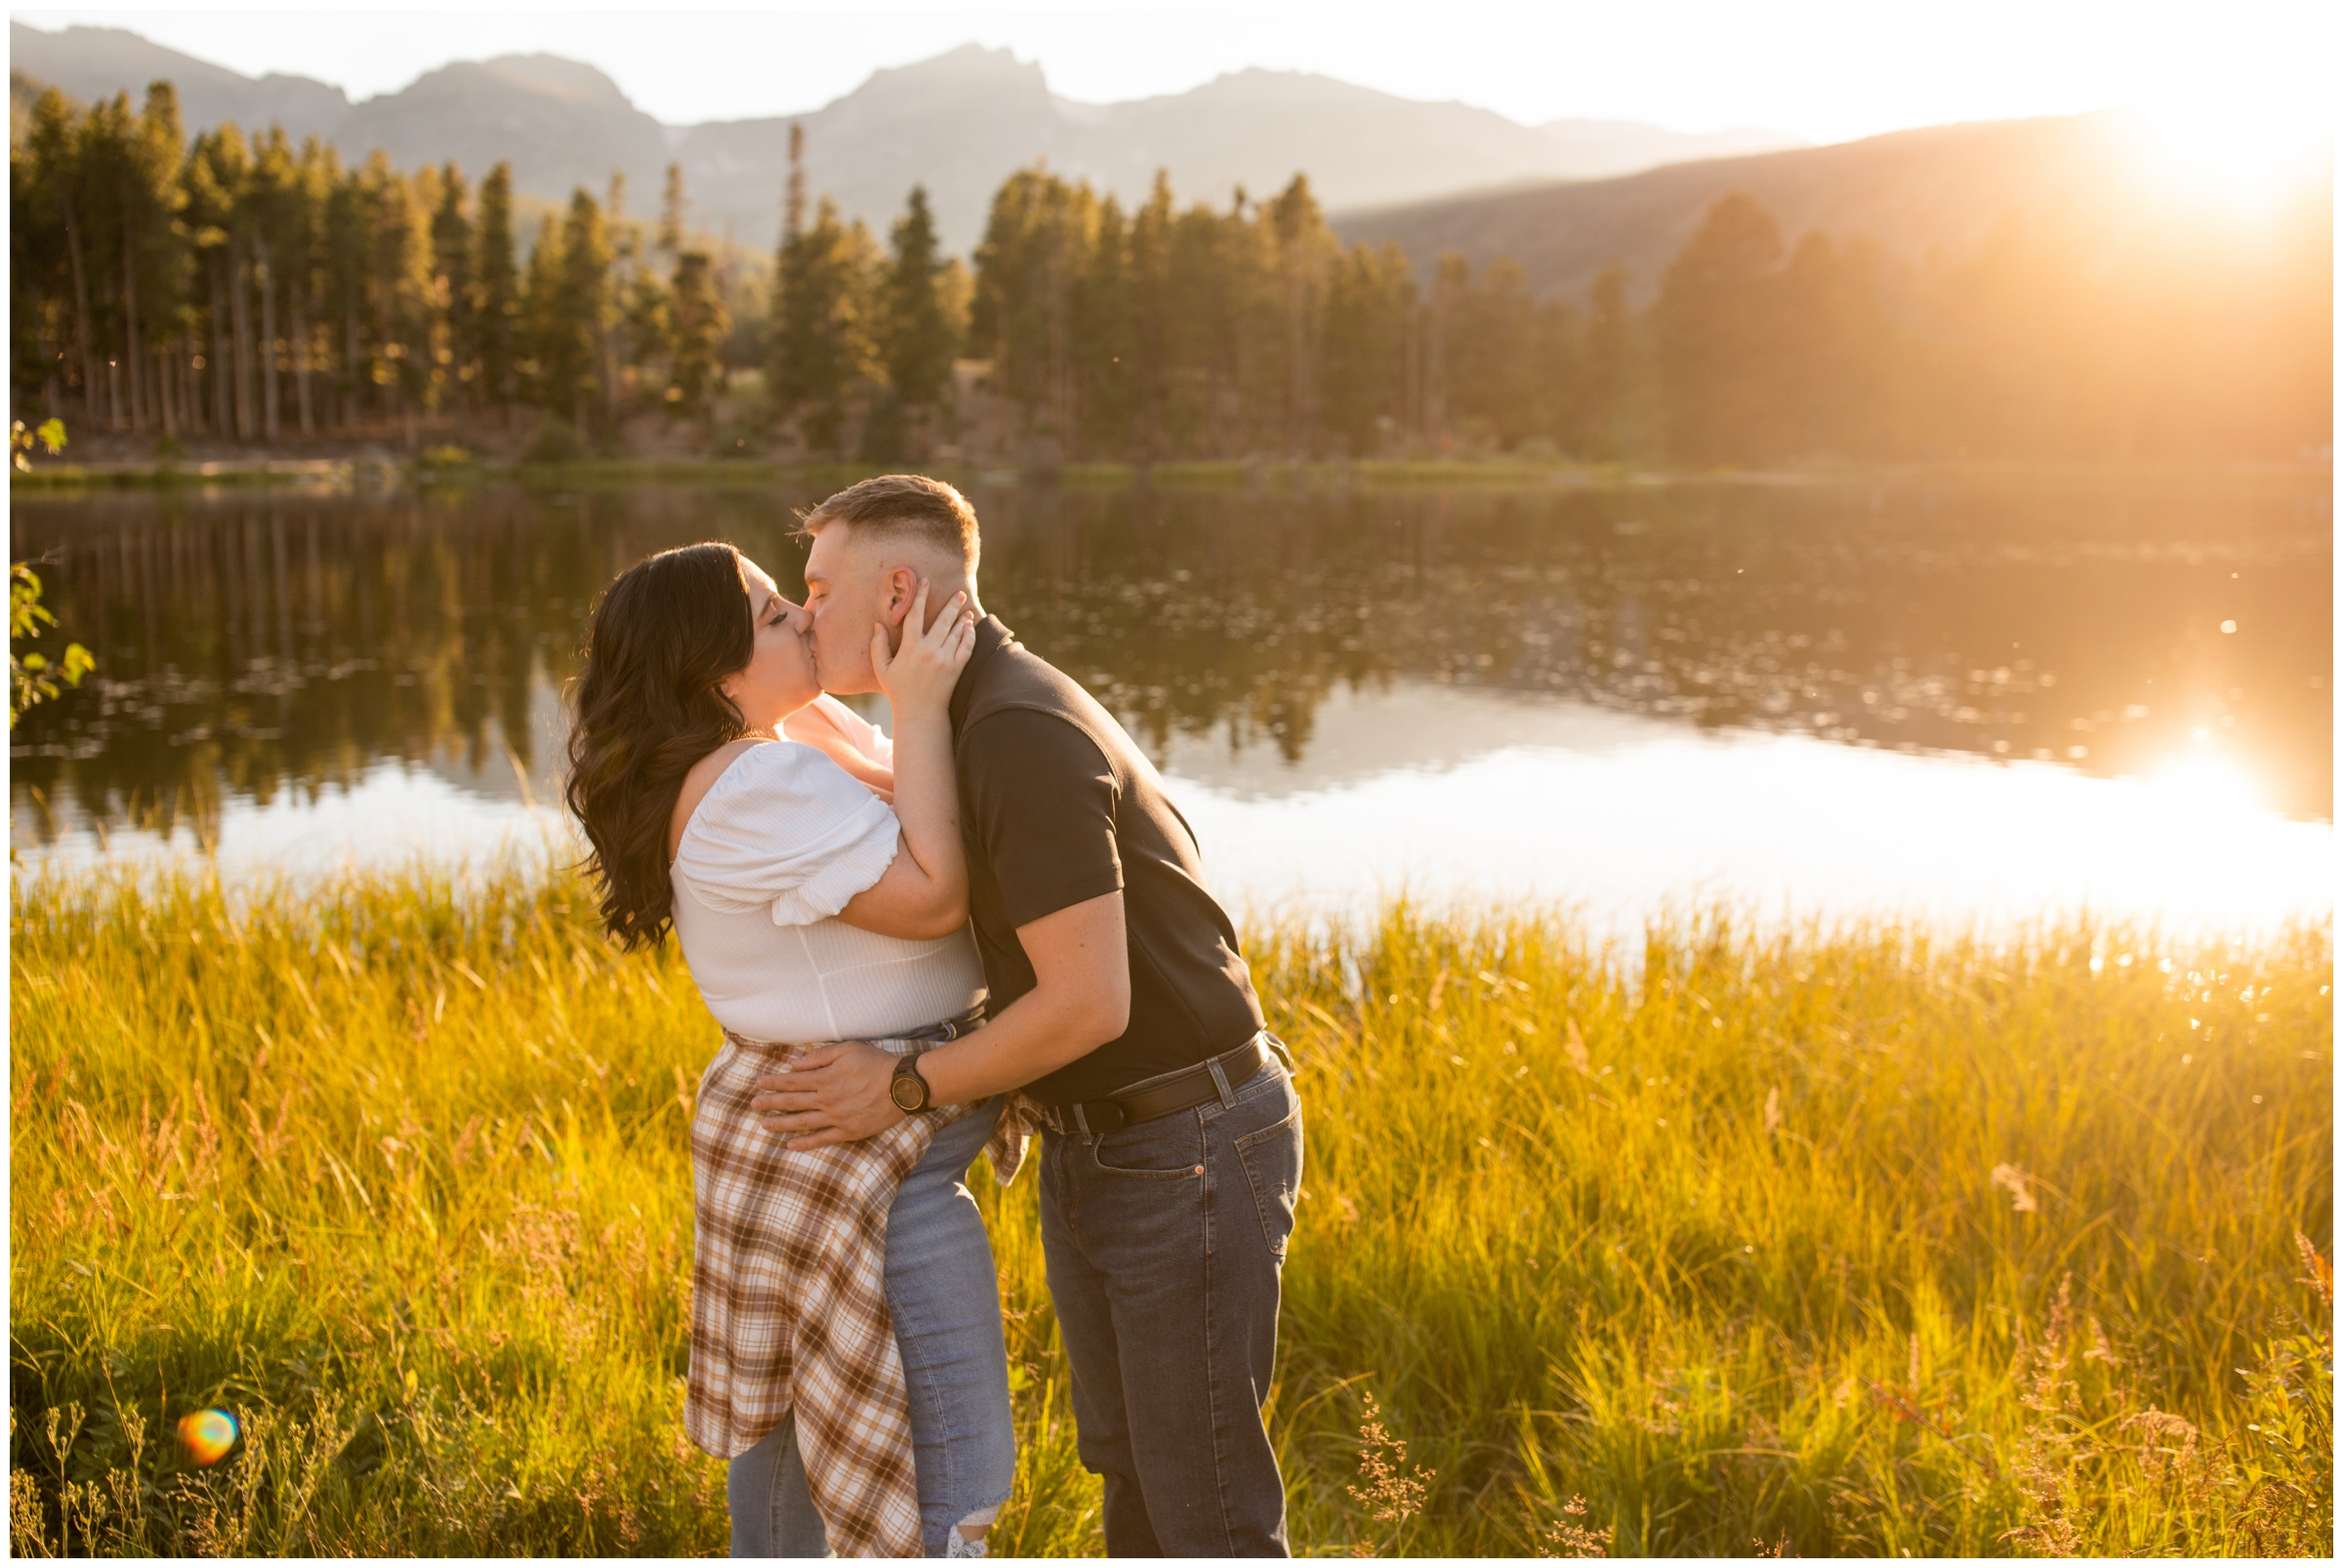 RMNP engagement photography session at Sprague Lake by Estes Park wedding photographer Plum Pretty Photography